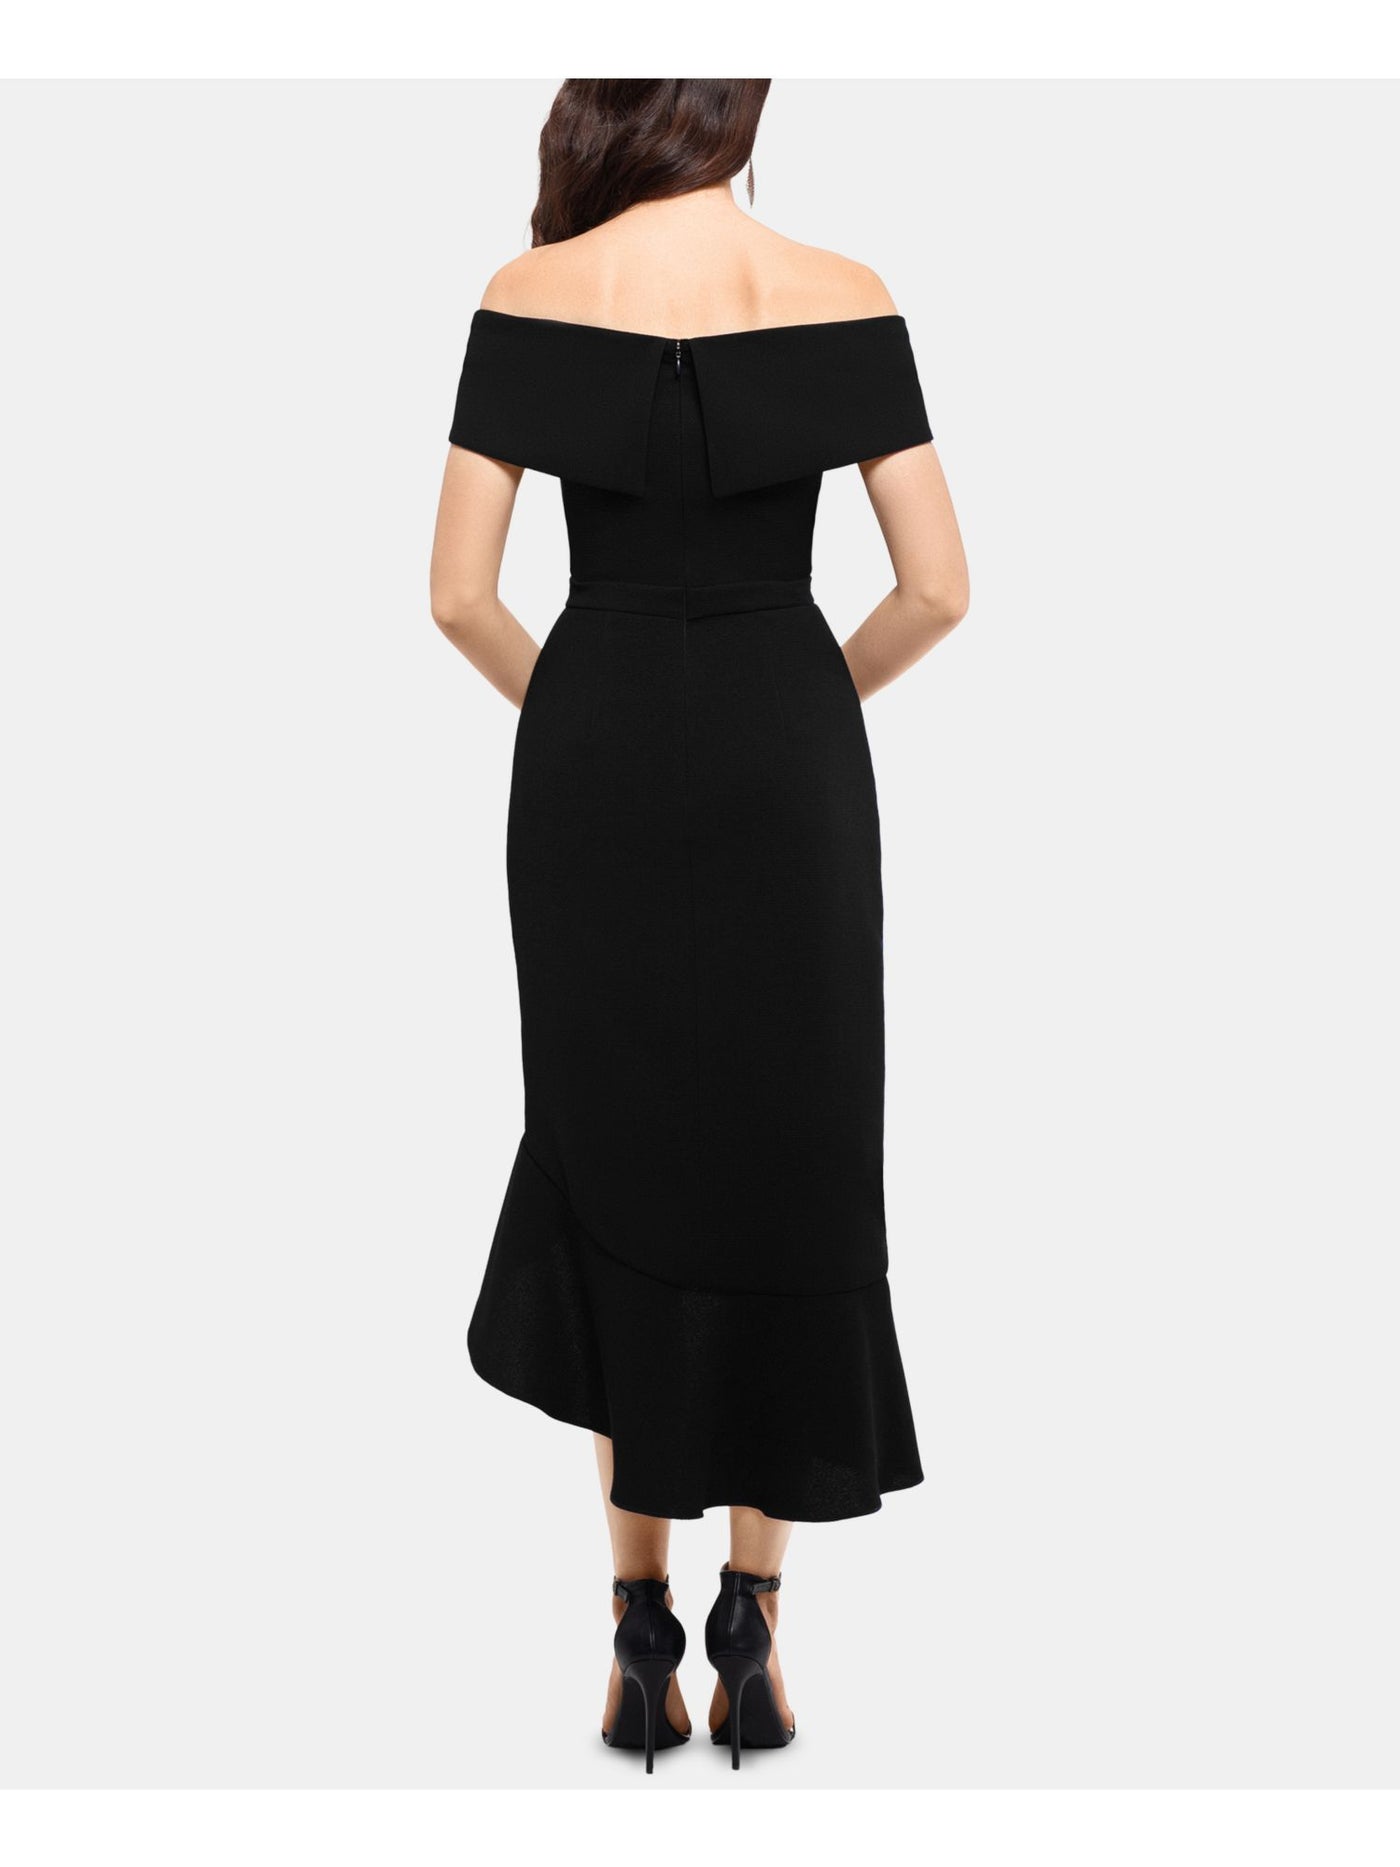 XSCAPE Womens Black Ruffled Short Sleeve Off Shoulder Above The Knee Evening Hi-Lo Dress 2